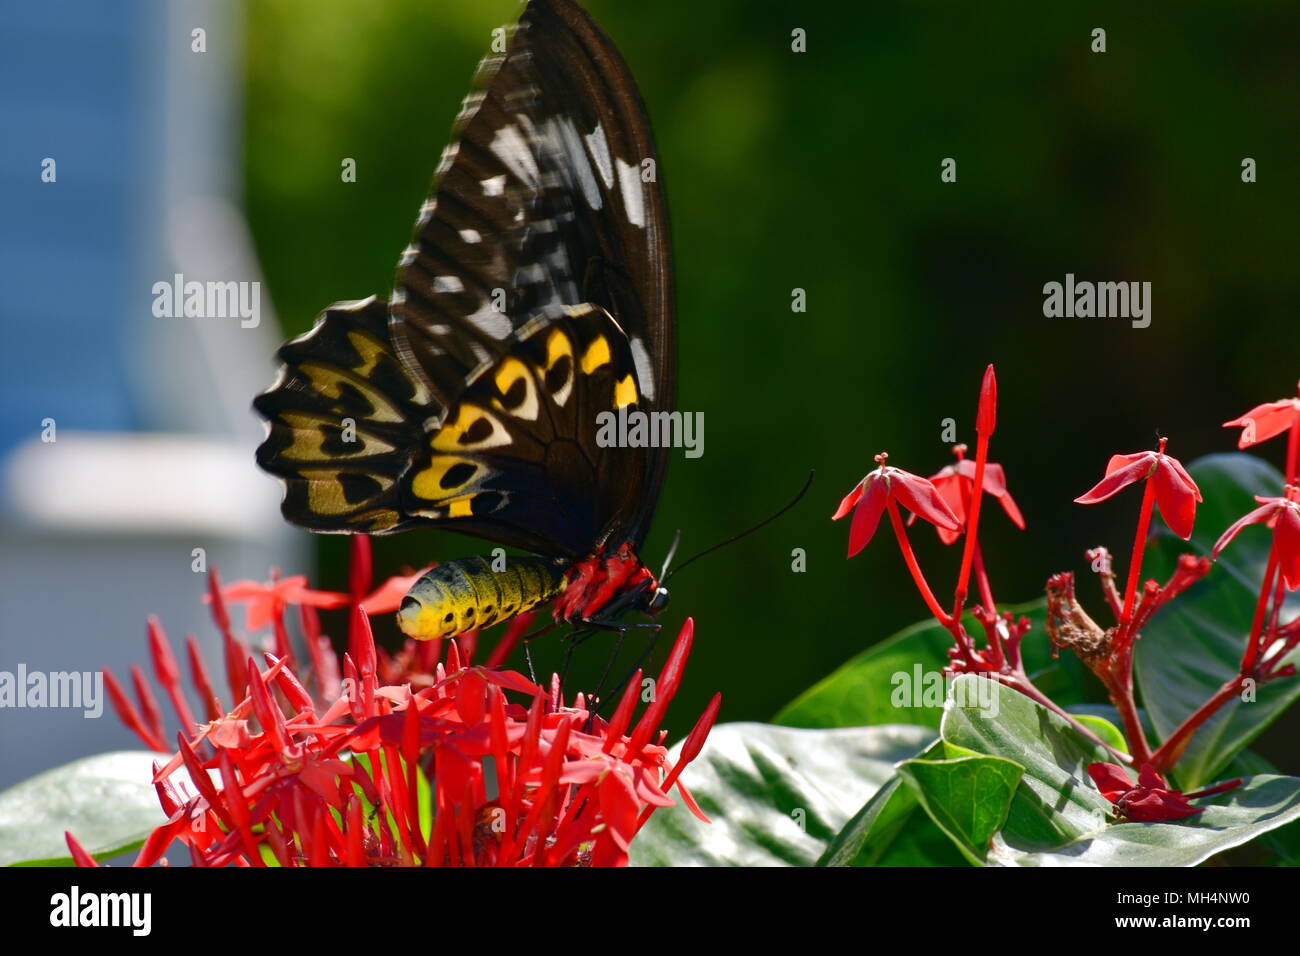 Ornithoptera euphorion, weiblichen Cairns birdwing Butterfly. Stockfoto